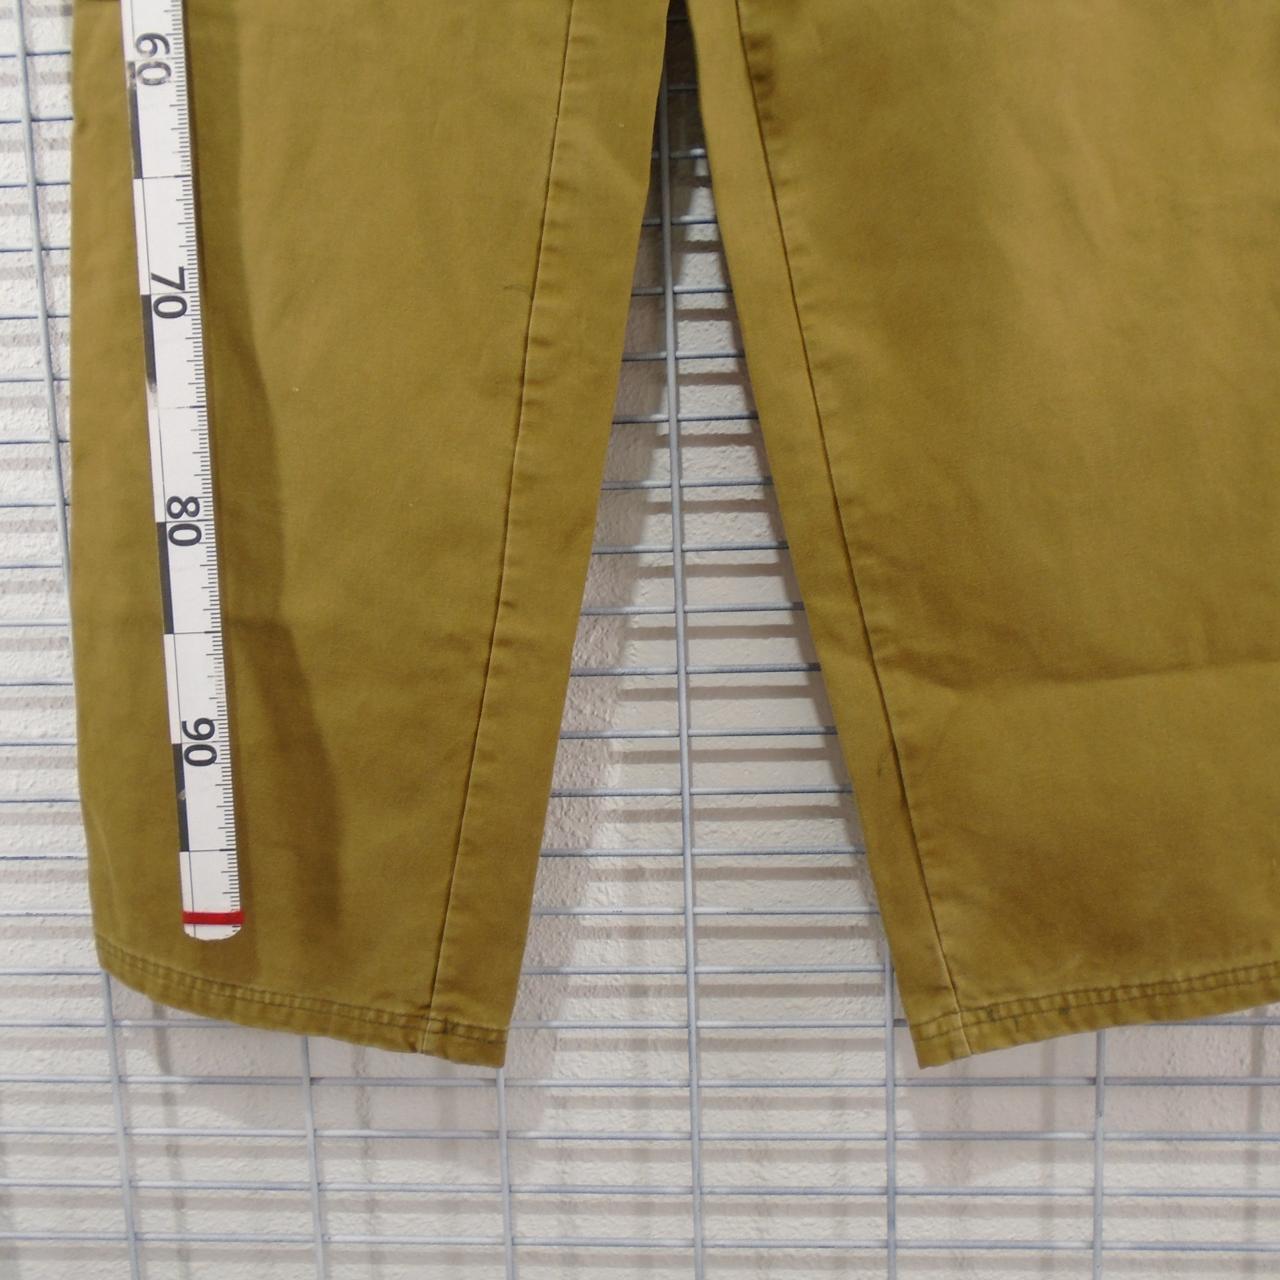 Women's Pants Gamo. Khaki. L. Used. Very good